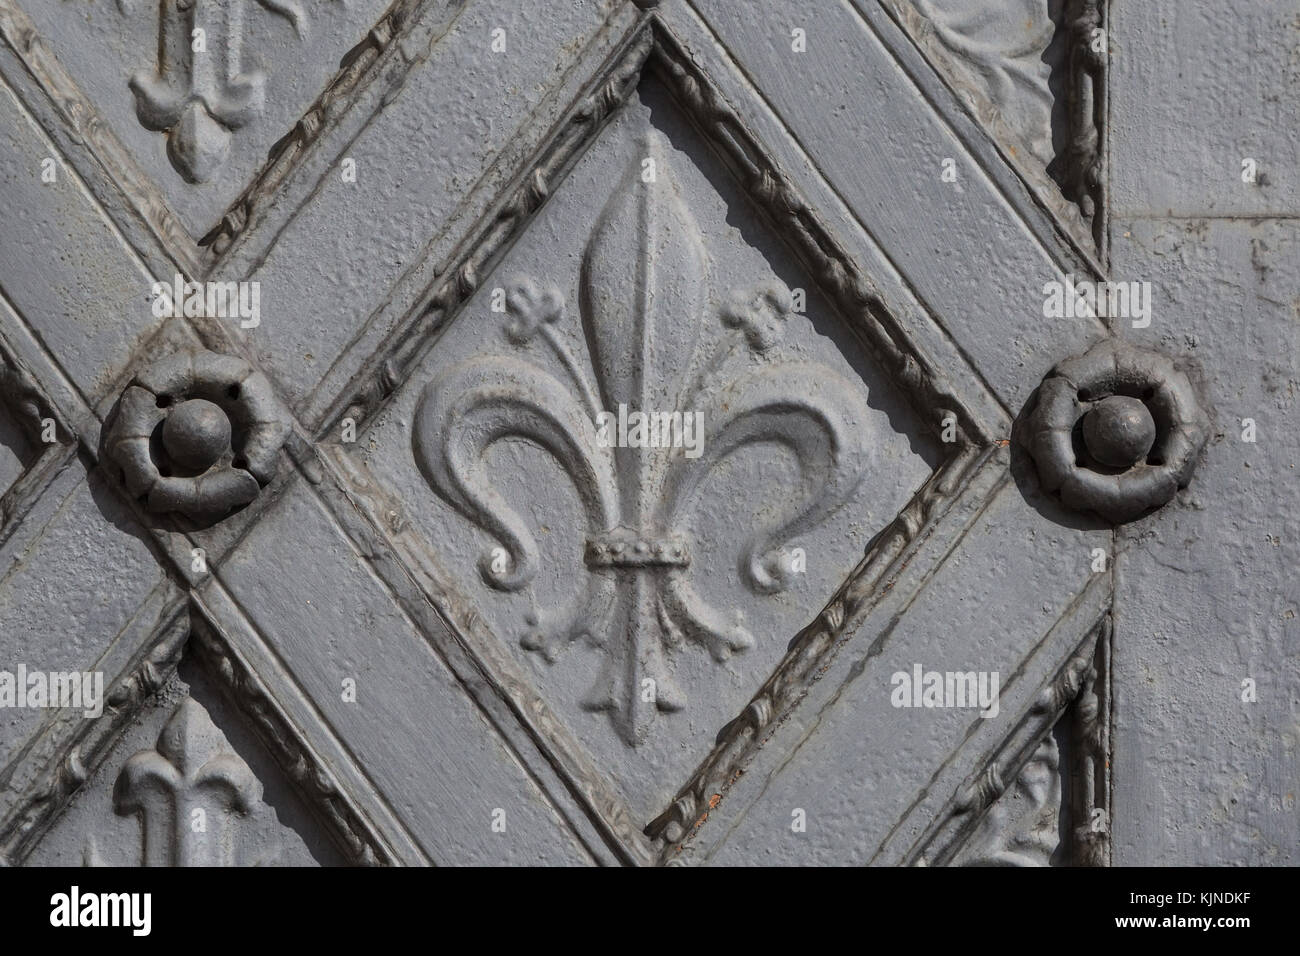 Ornament in the shape of fleur de lis and cross on a metal door in monastery Klosterneuburg, Austria Stock Photo